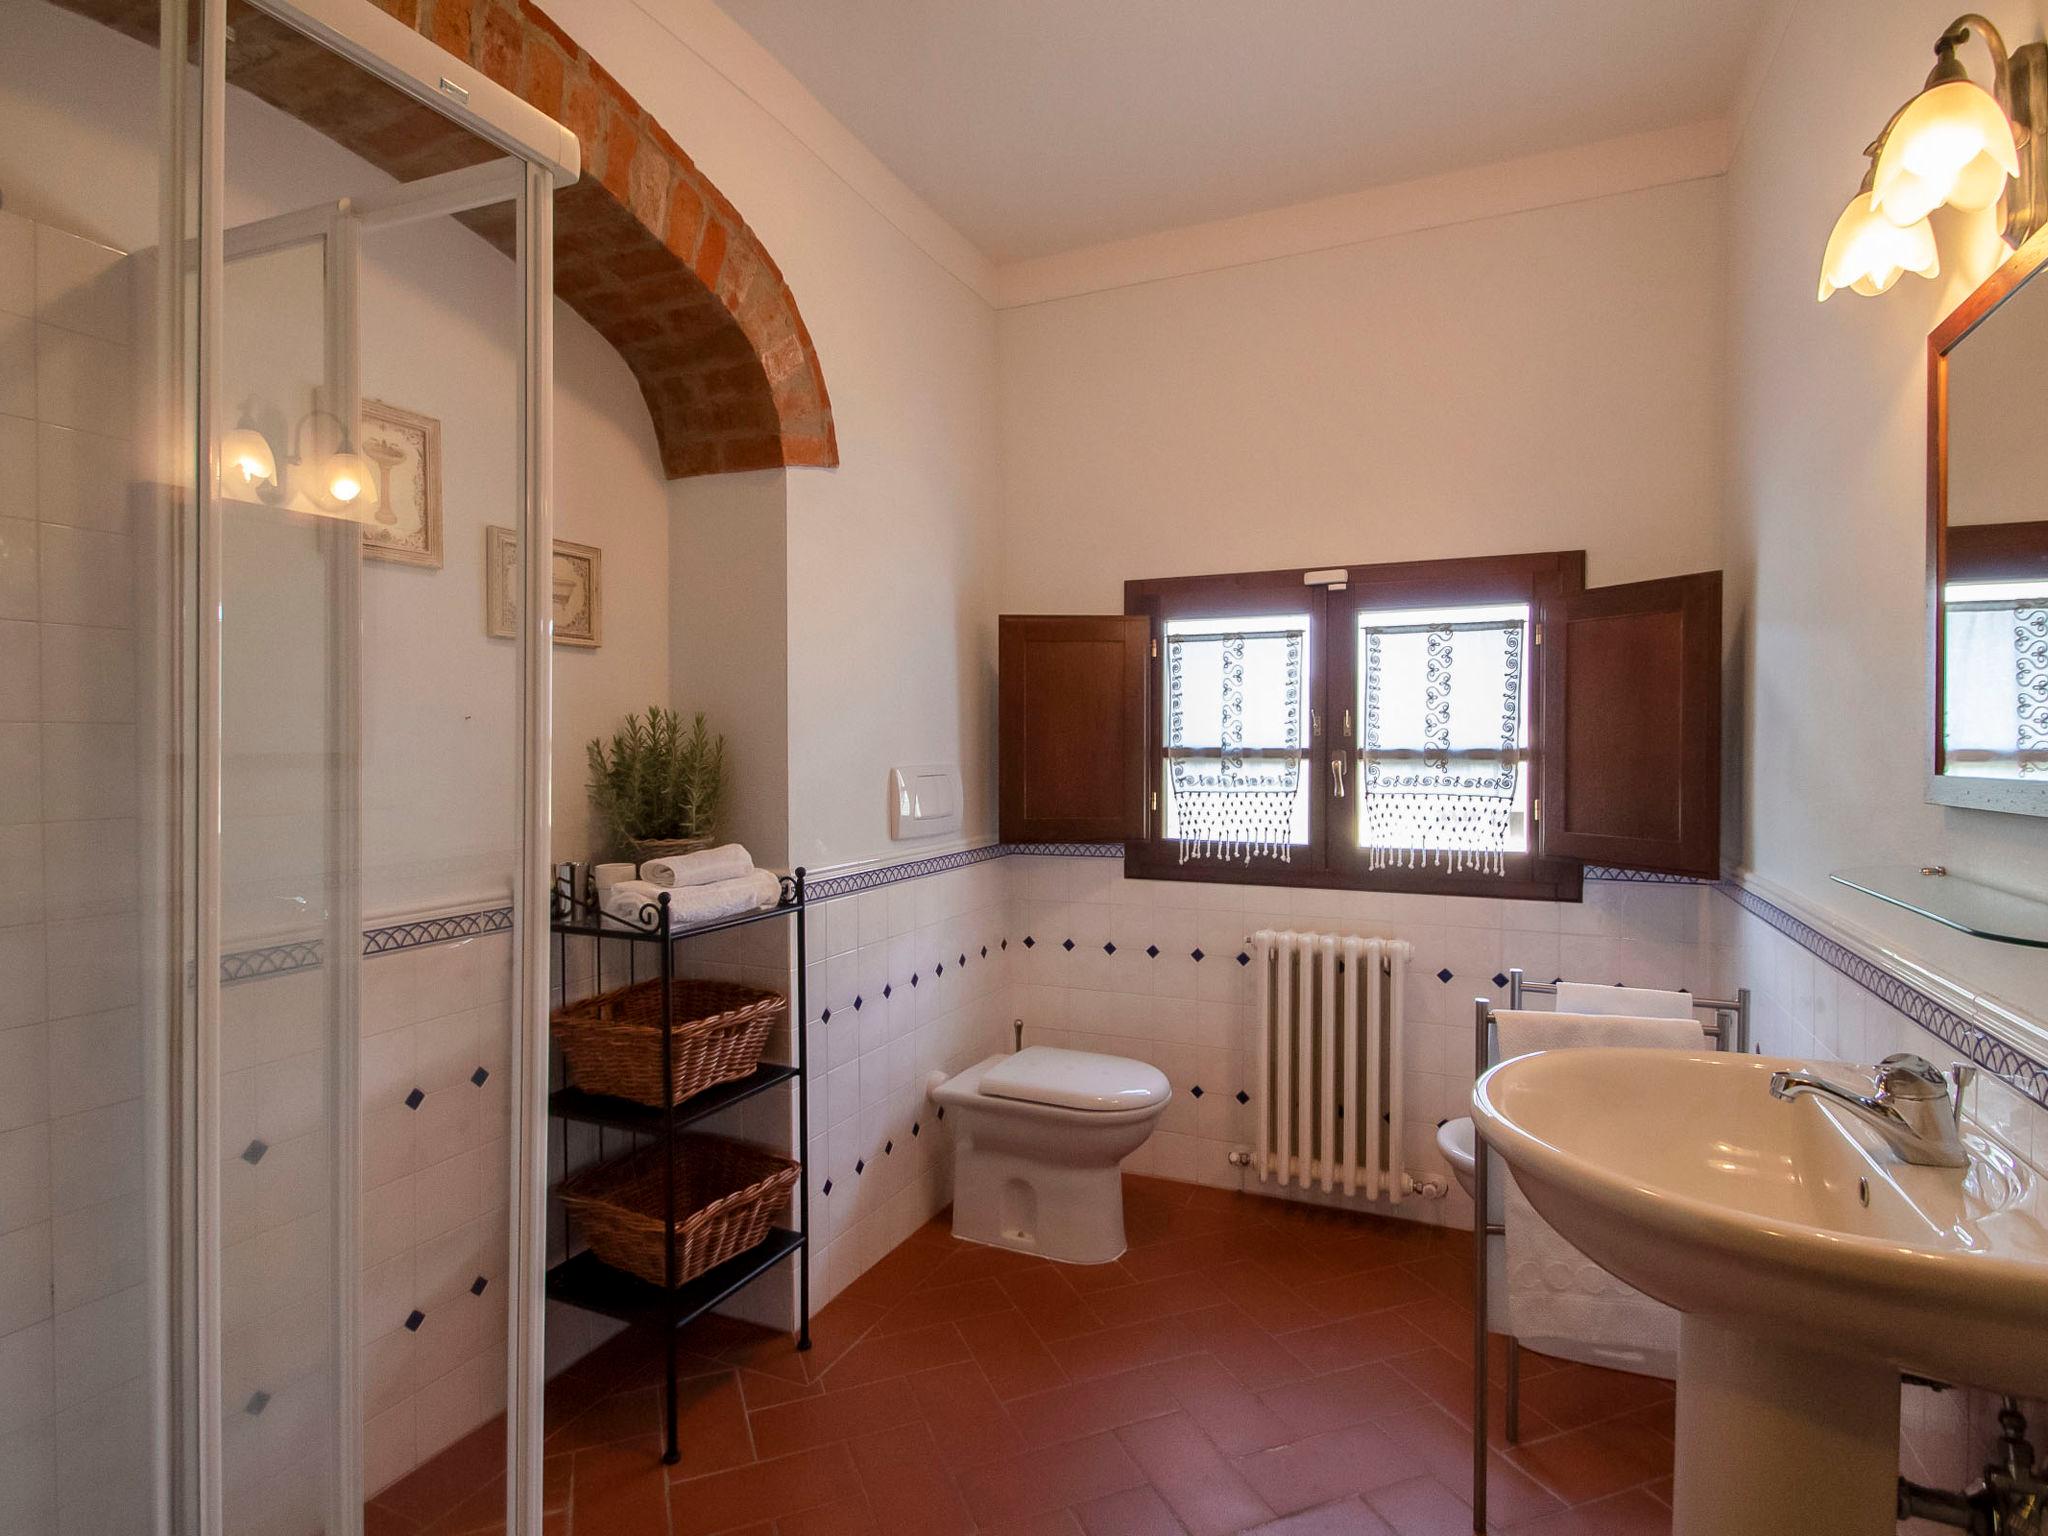 Photo 11 - Appartement de 2 chambres à San Giovanni Valdarno avec piscine et terrasse